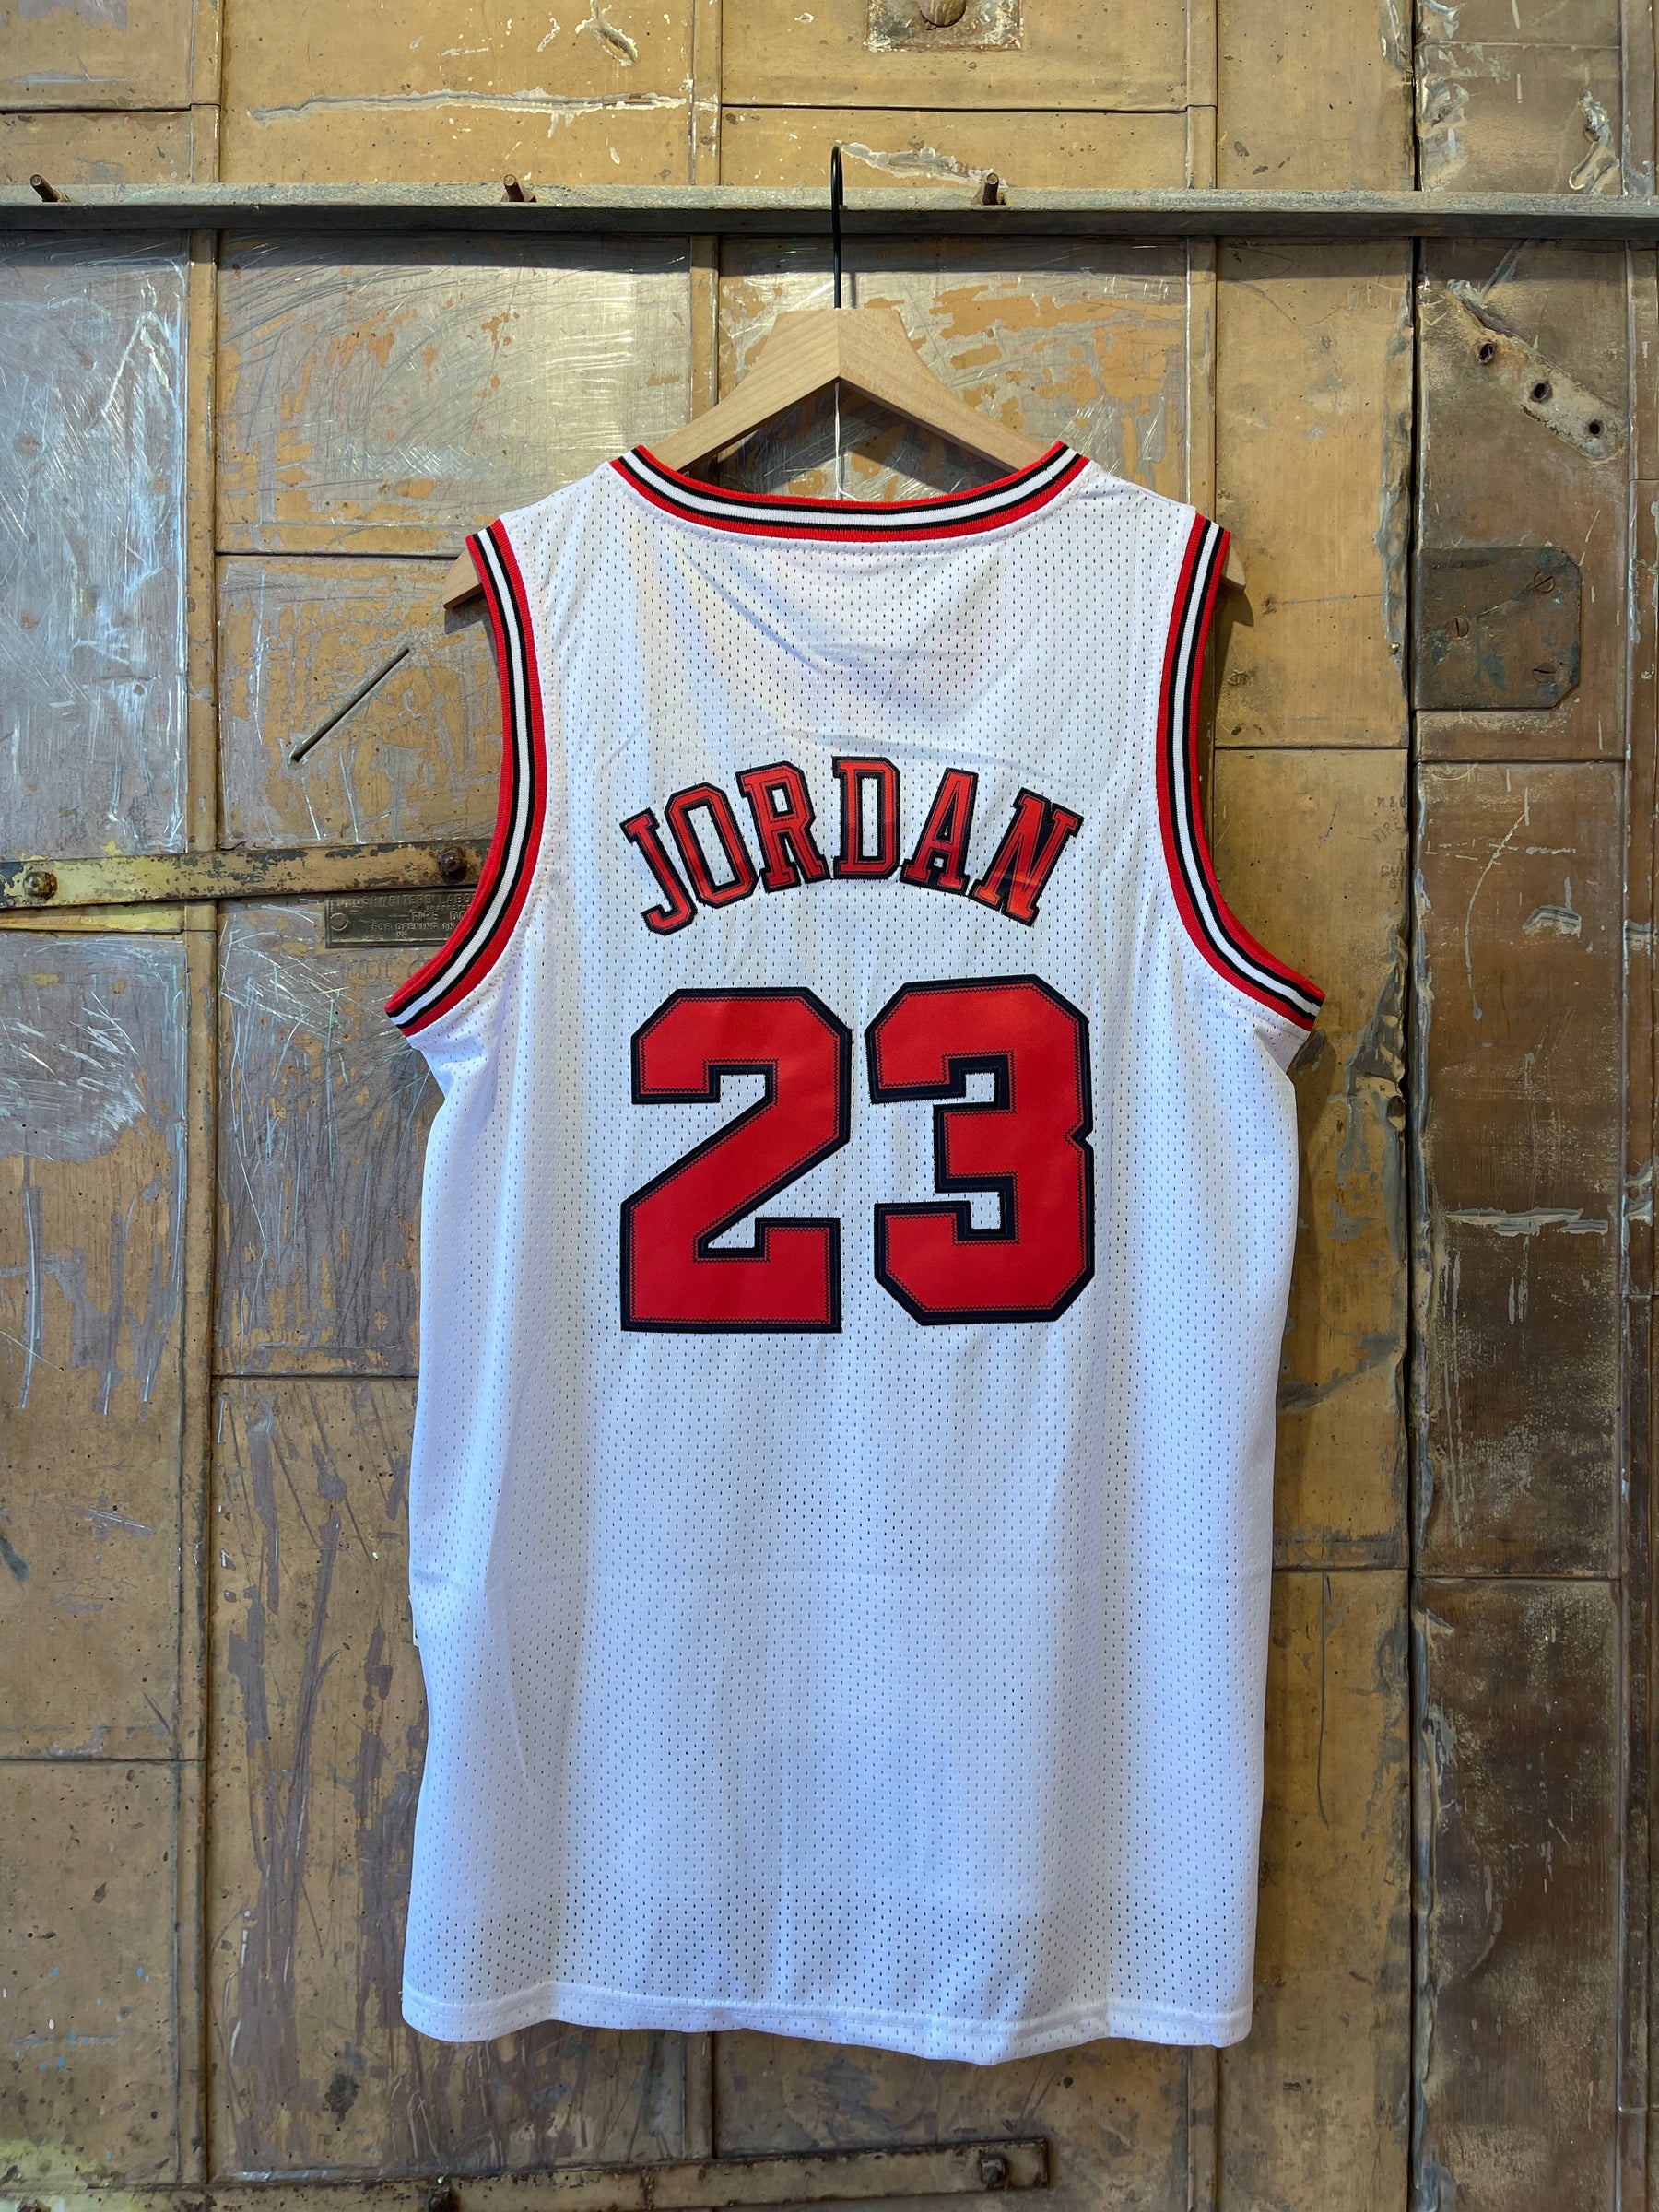 Jordan Bulls Jersey White